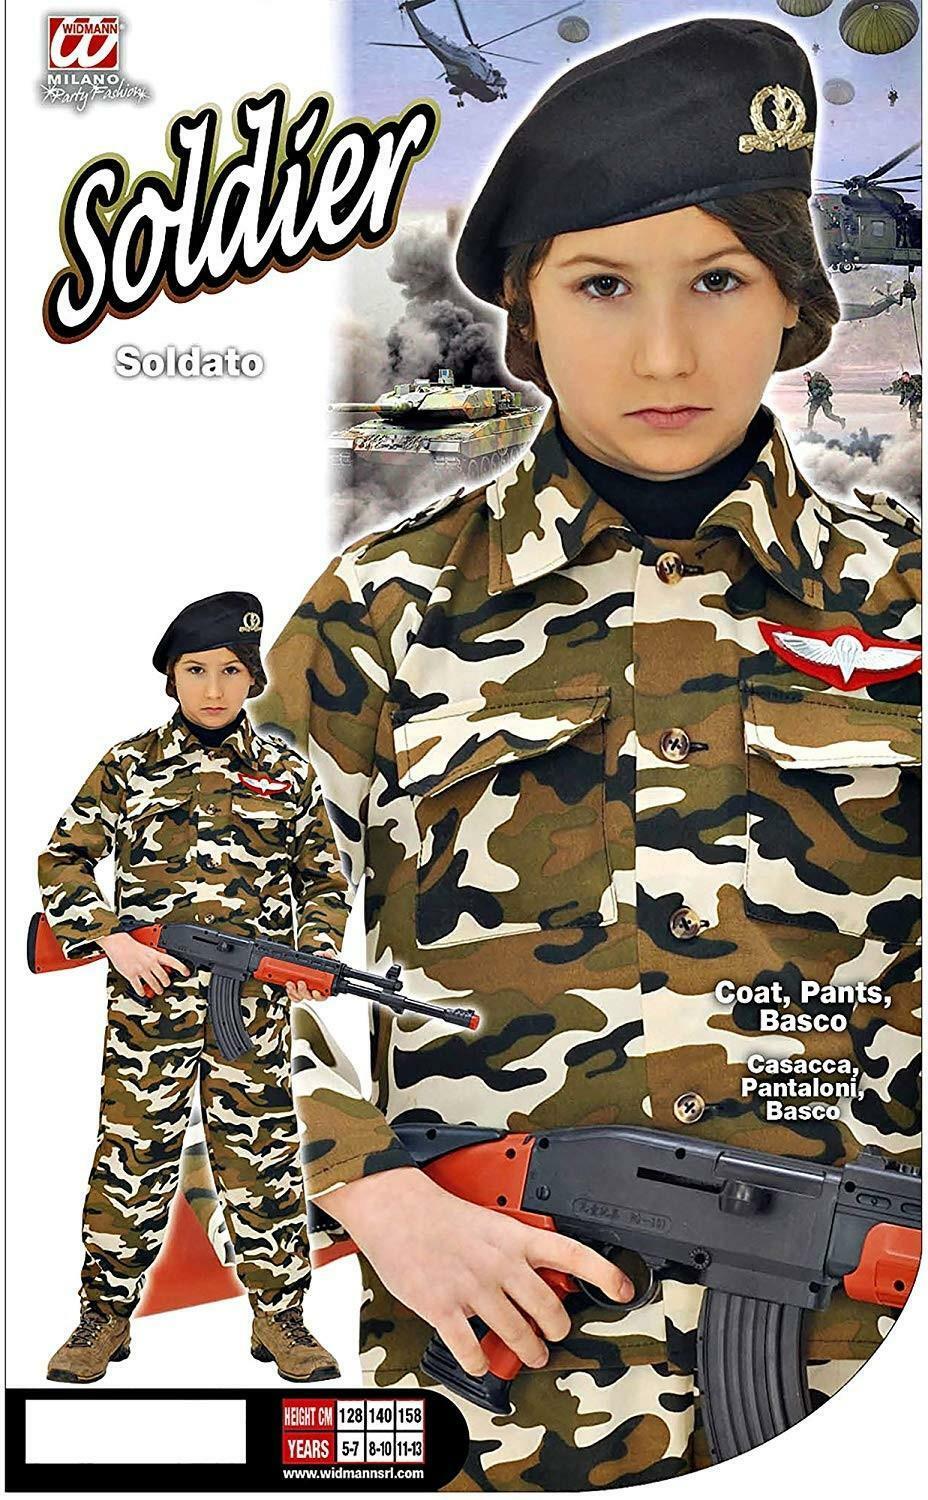 widmann costume soldato taglia 11/13 anni